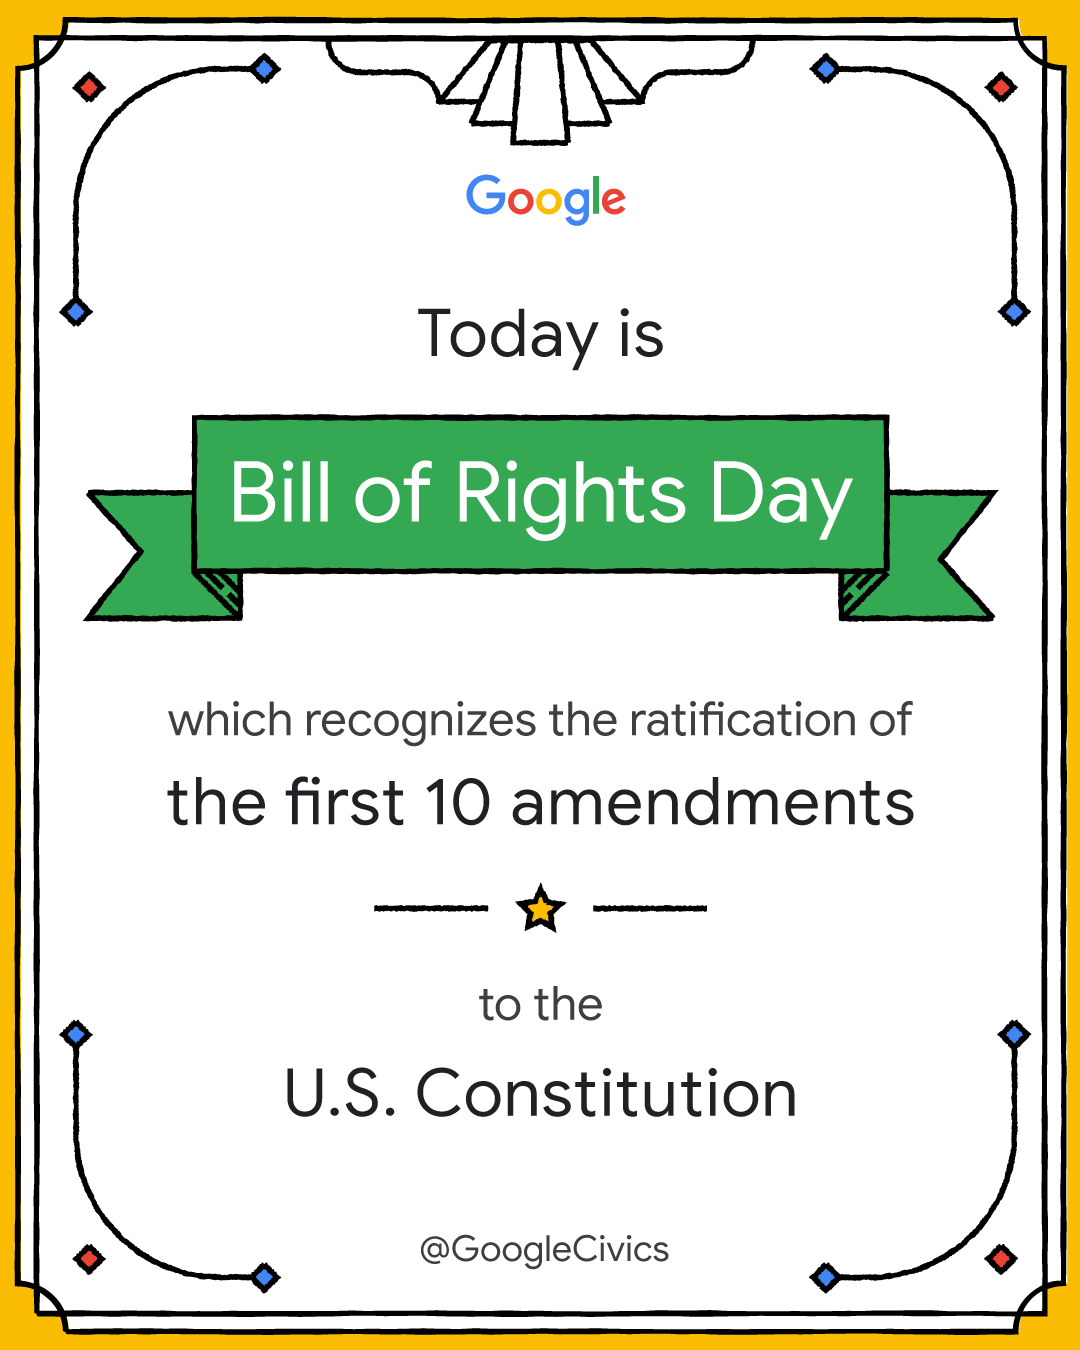 167-GCV-Dec.-15-Bill-of-Rights-Day-TW-Thread-(Design)-1-DL.png